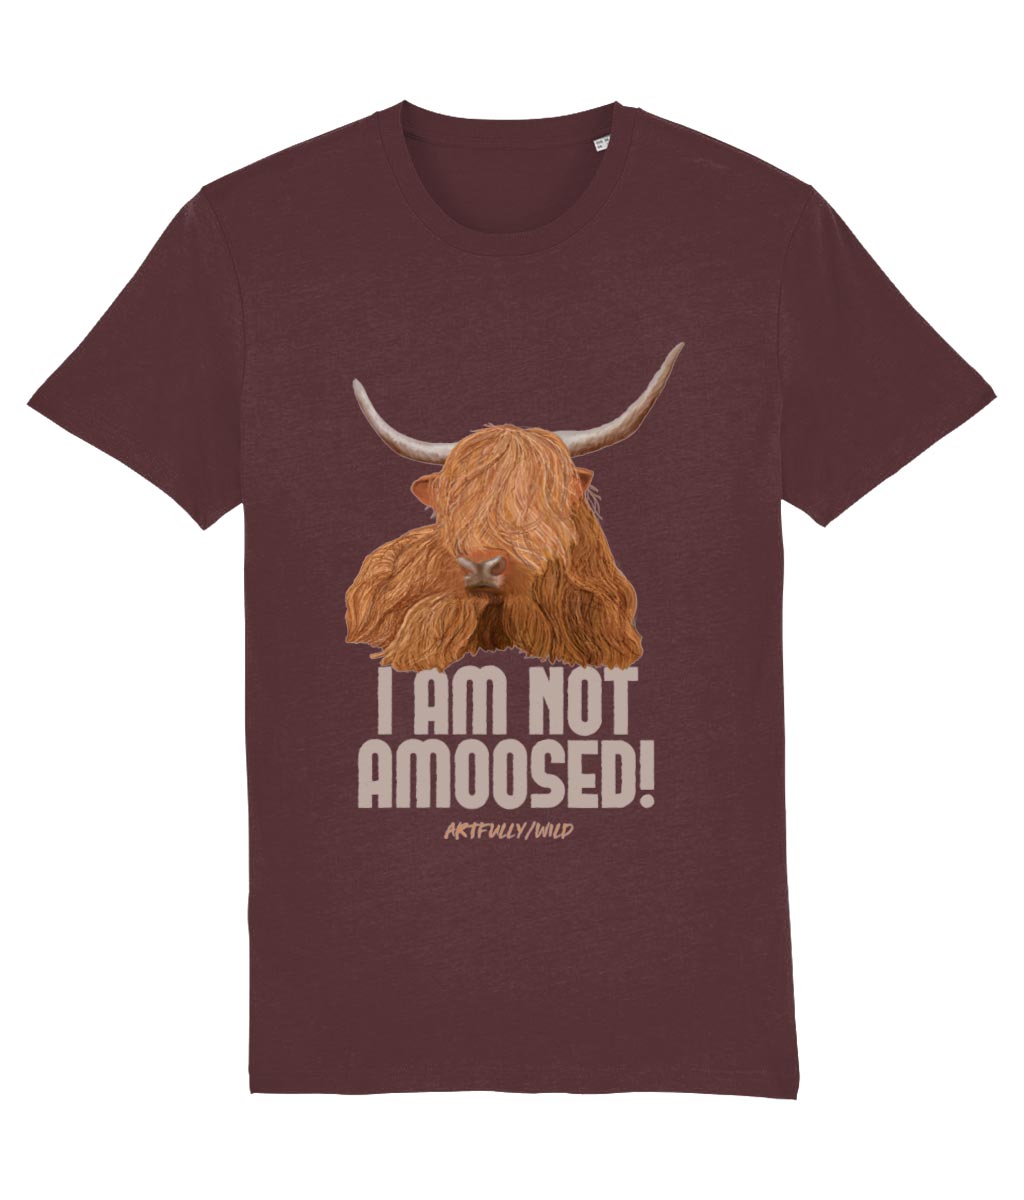 'I AM NOT AMOOSED' Print on Burgundy Sustainable T-Shirt. Unisex/Women/Men. Certified Organic Clothing. Original Highland Cow Illustration by Artfully/Wild.